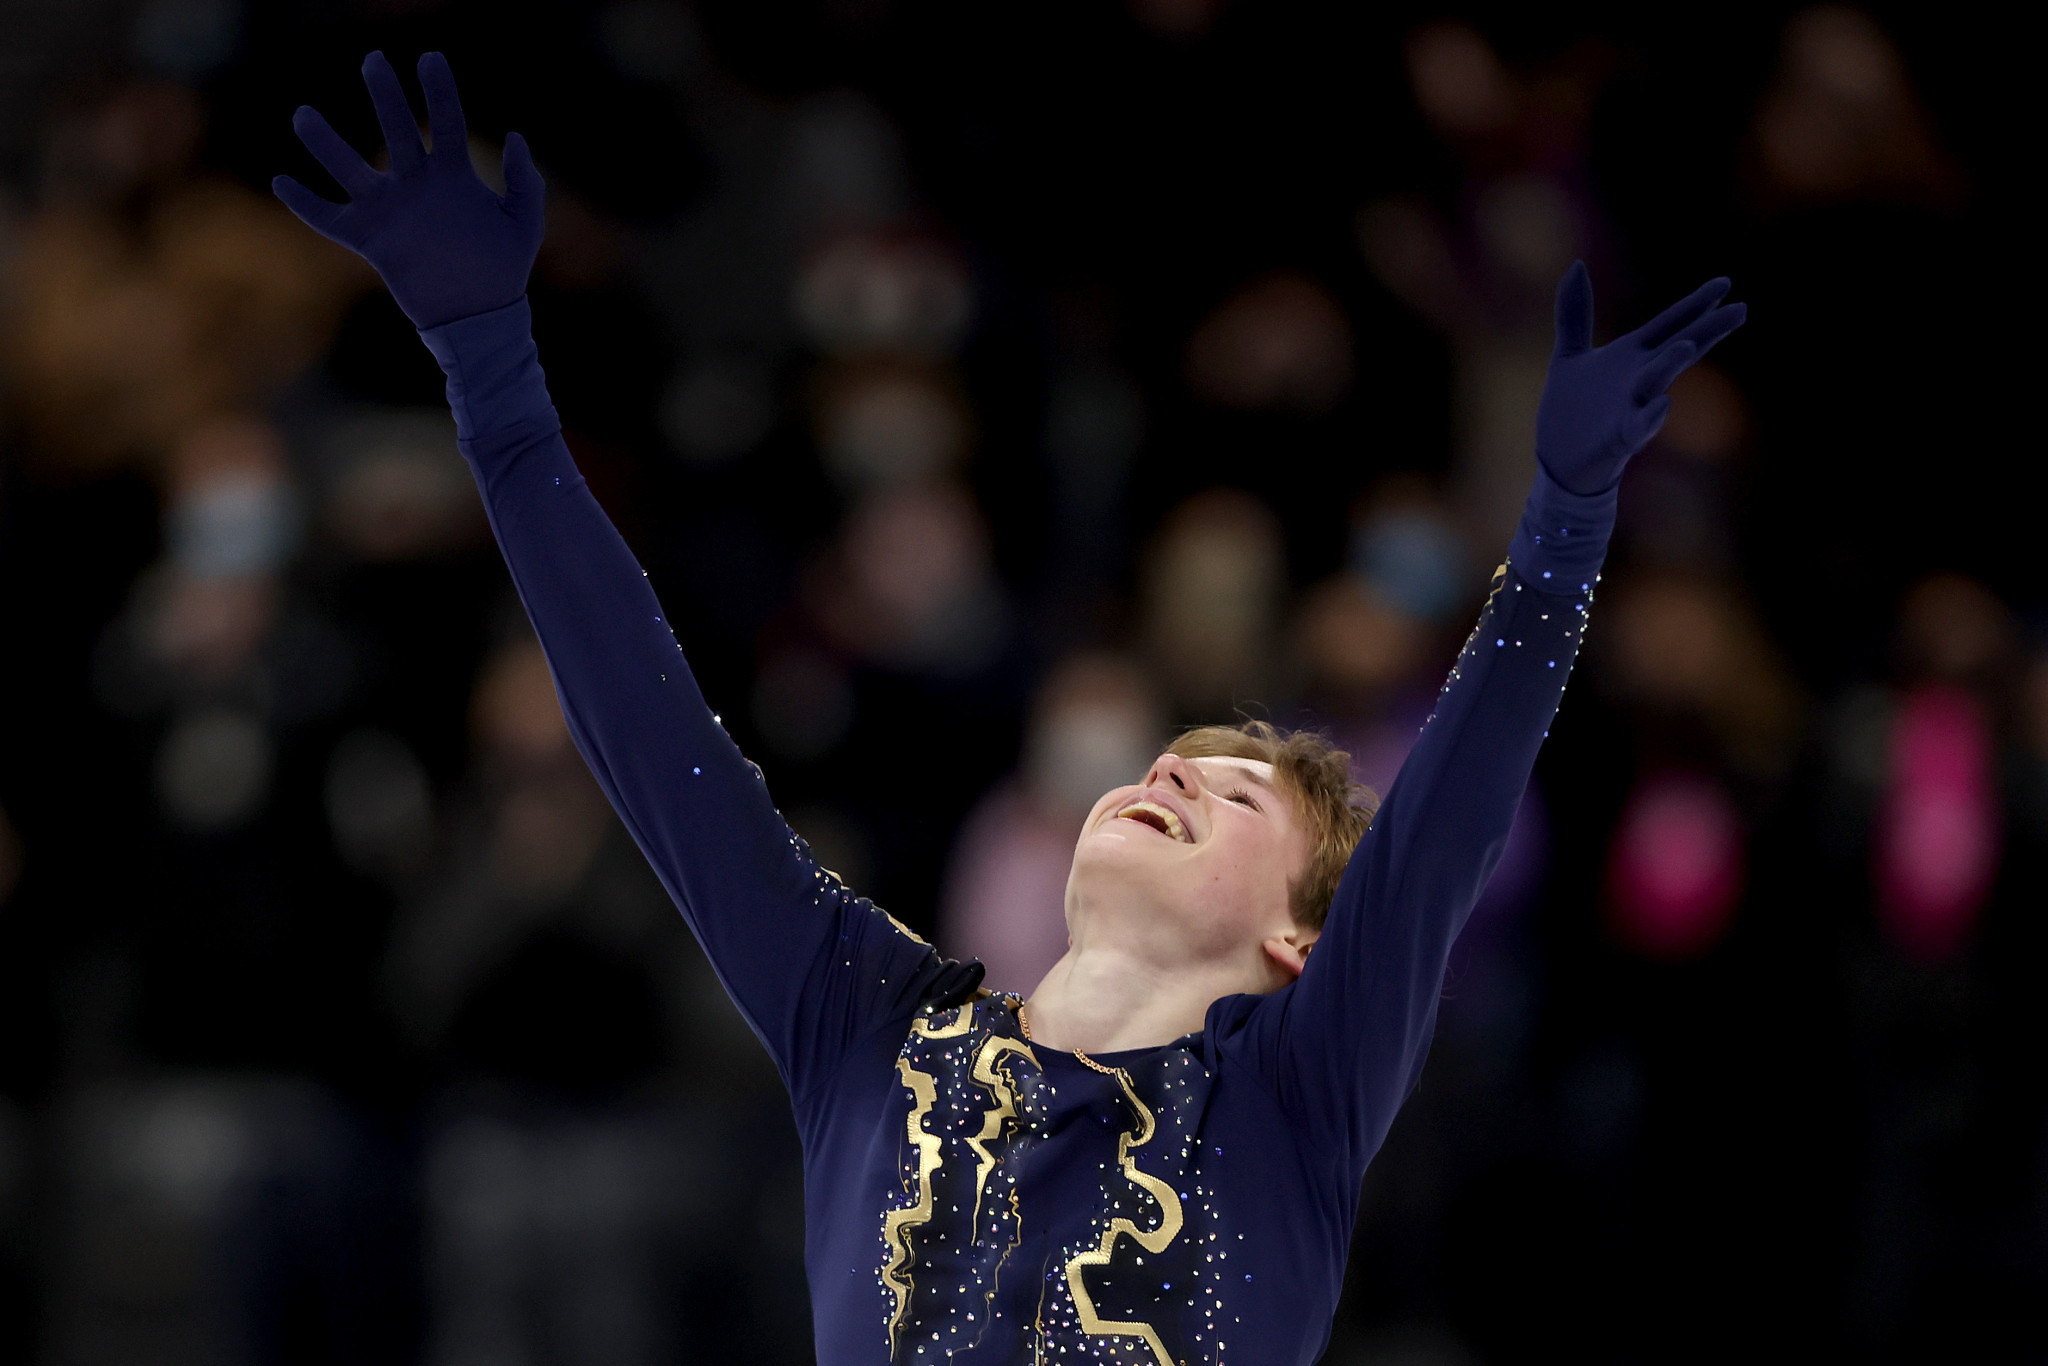 Malinin sets world record in triumph at World Junior Figure Skating Championships